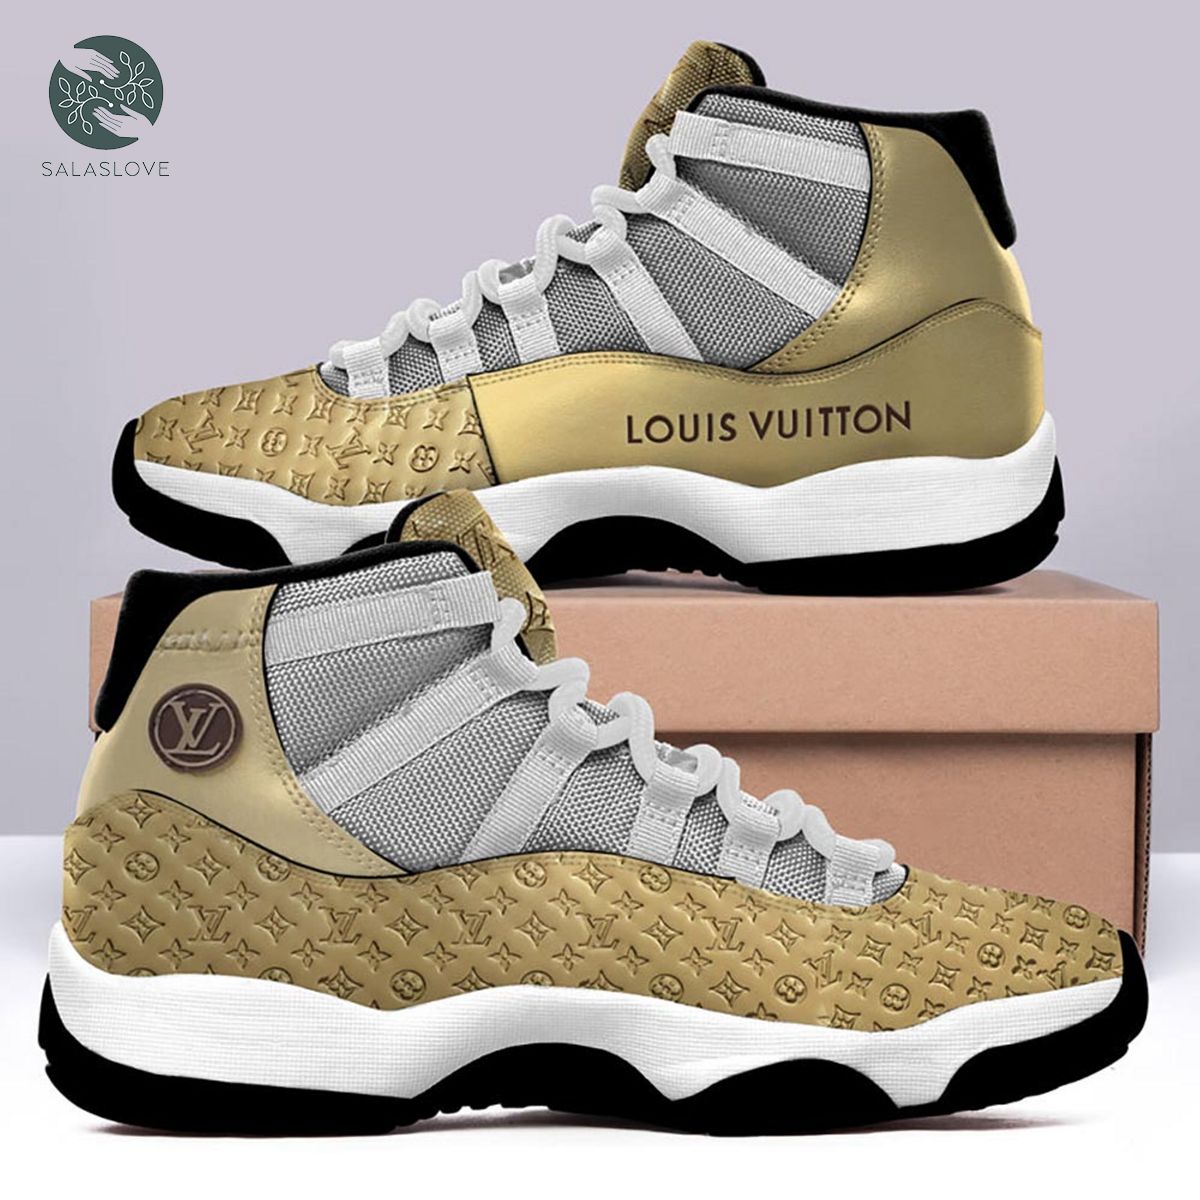 Louis Vuitton Gold Air Jordan 11 Sneakers Shoes Hot For Men Women